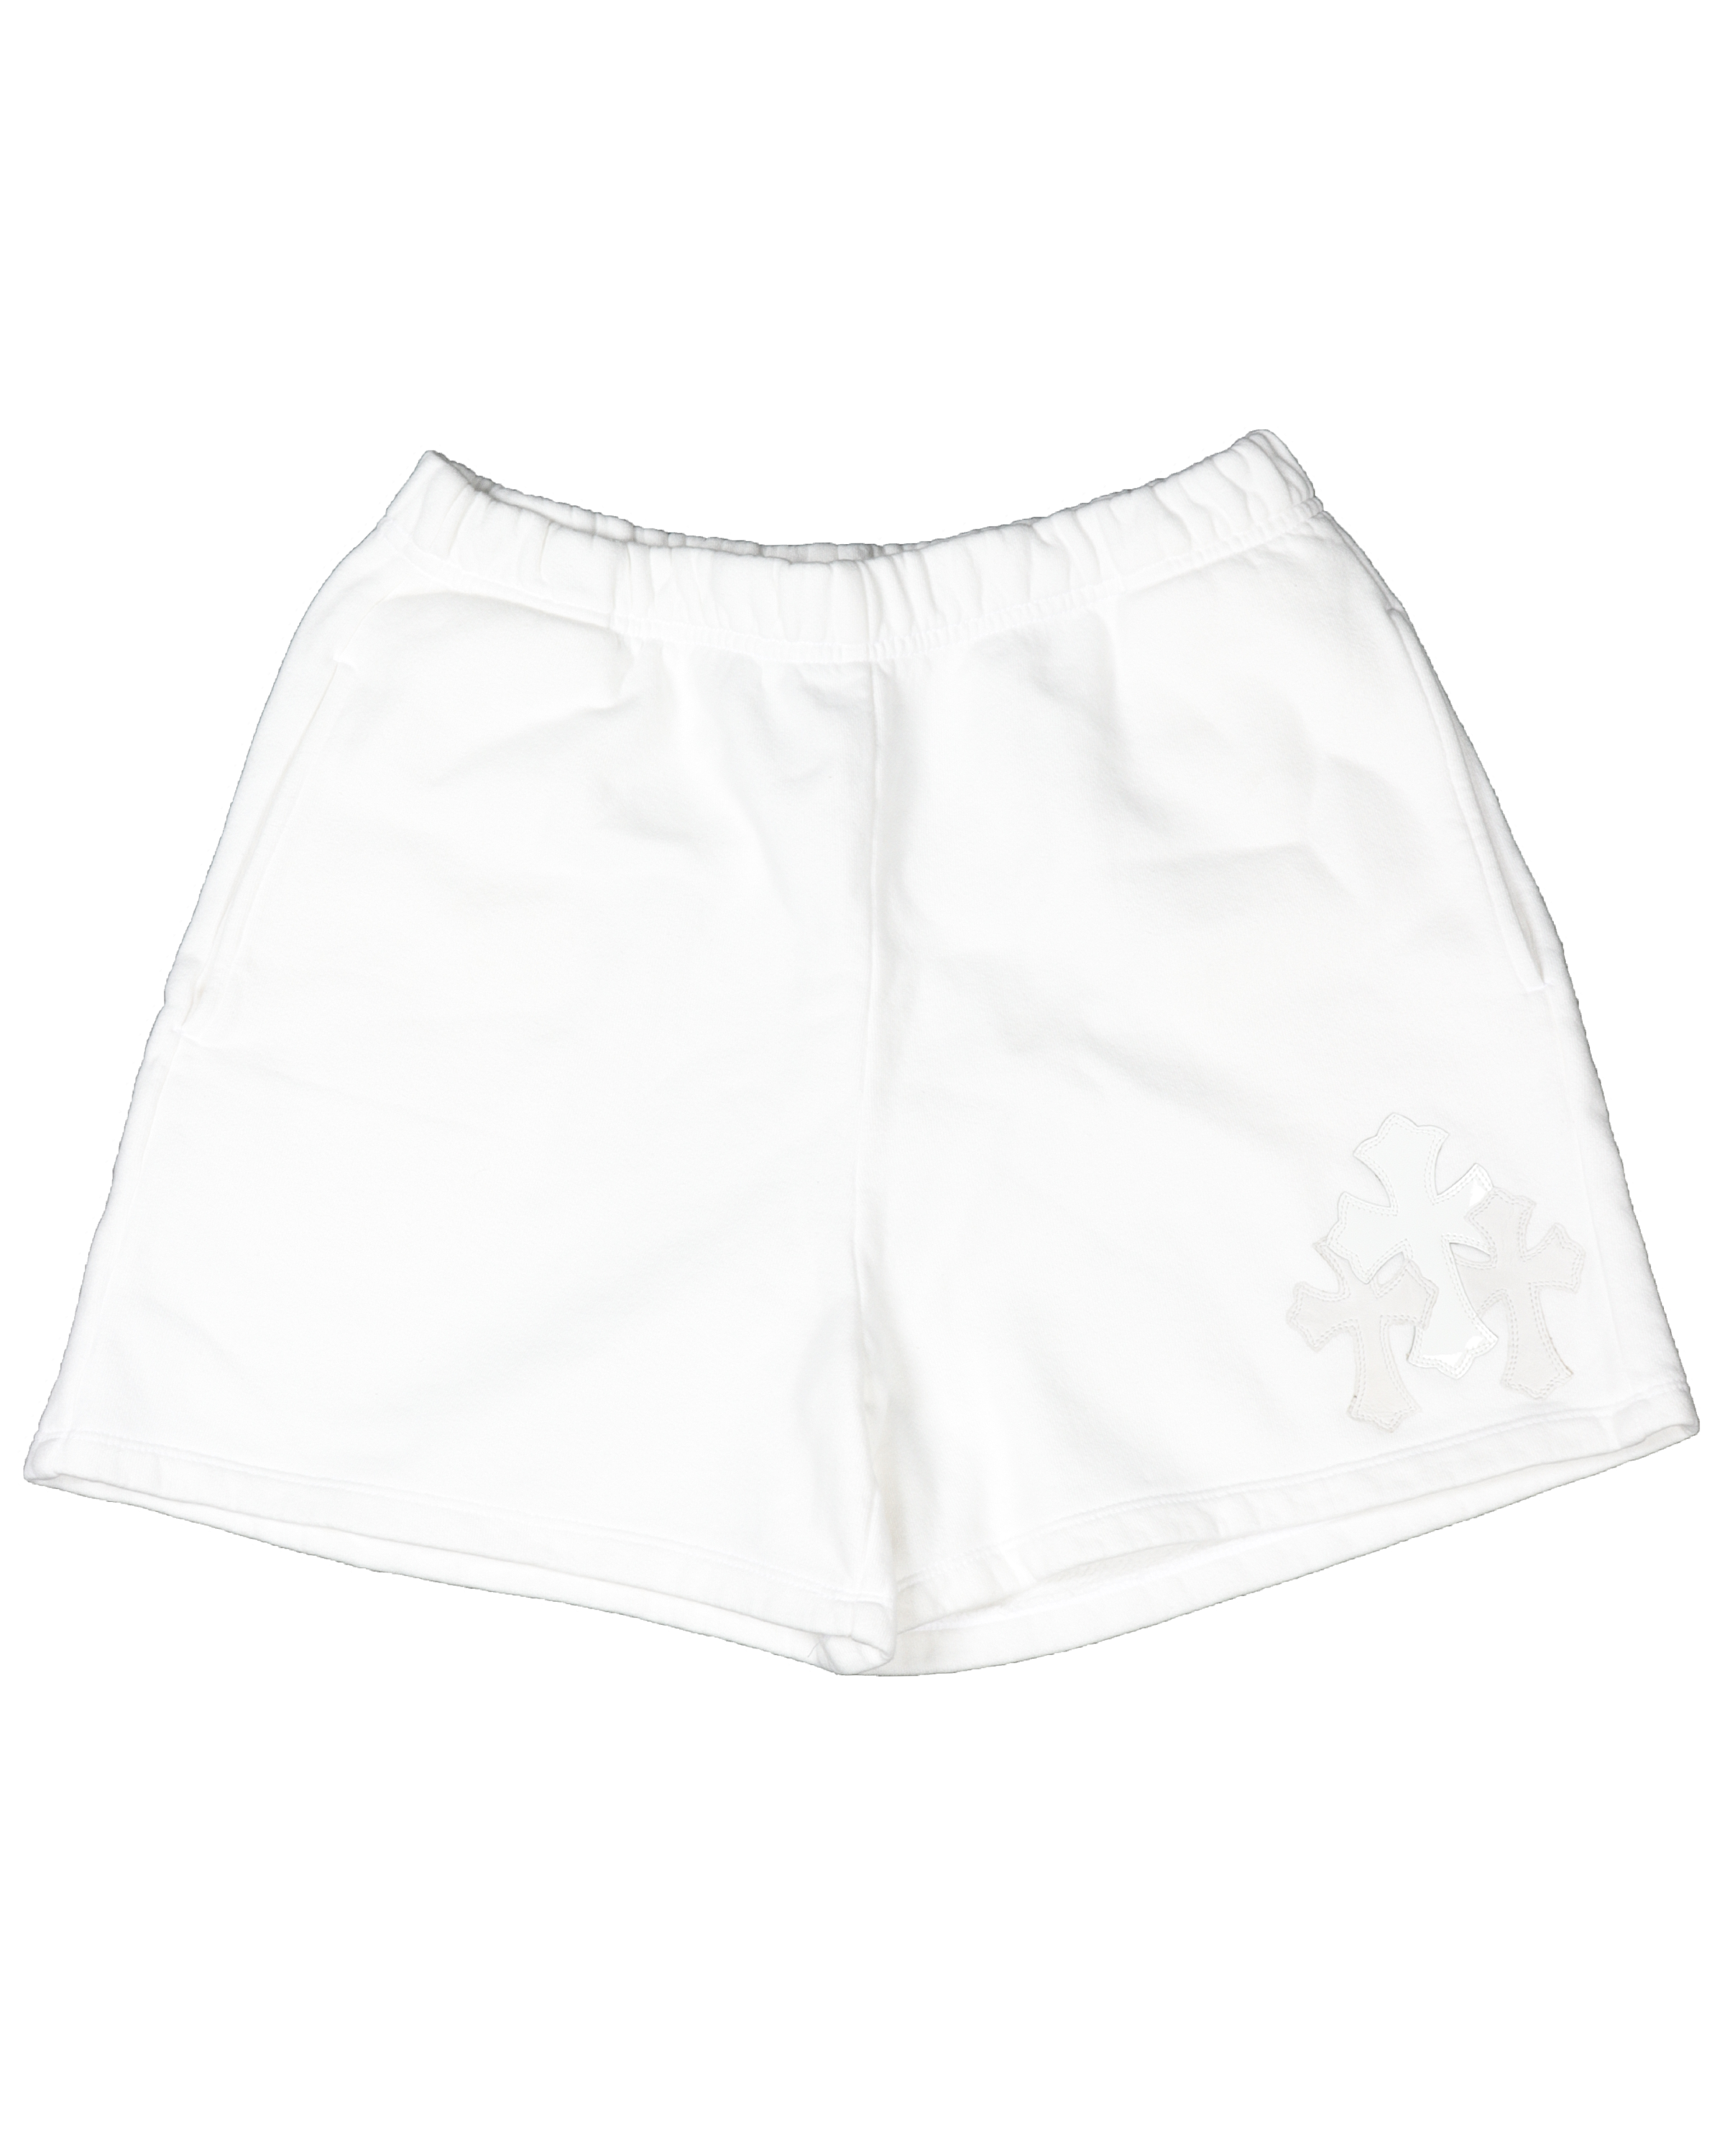 White Cross Sweat Shorts